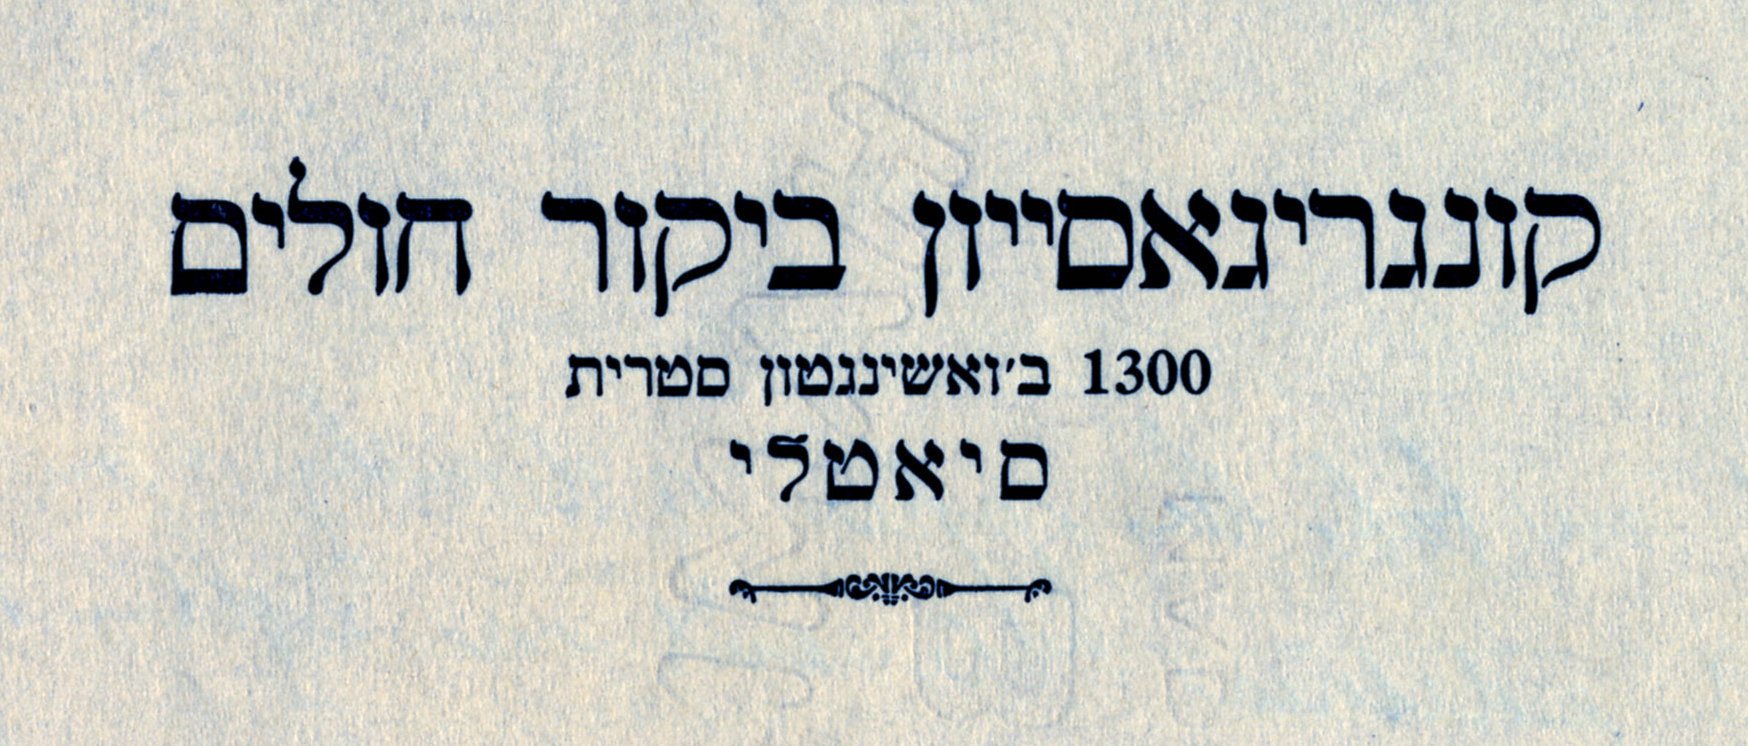 Congregation [Sephardic] Bikur Holim's letterhead